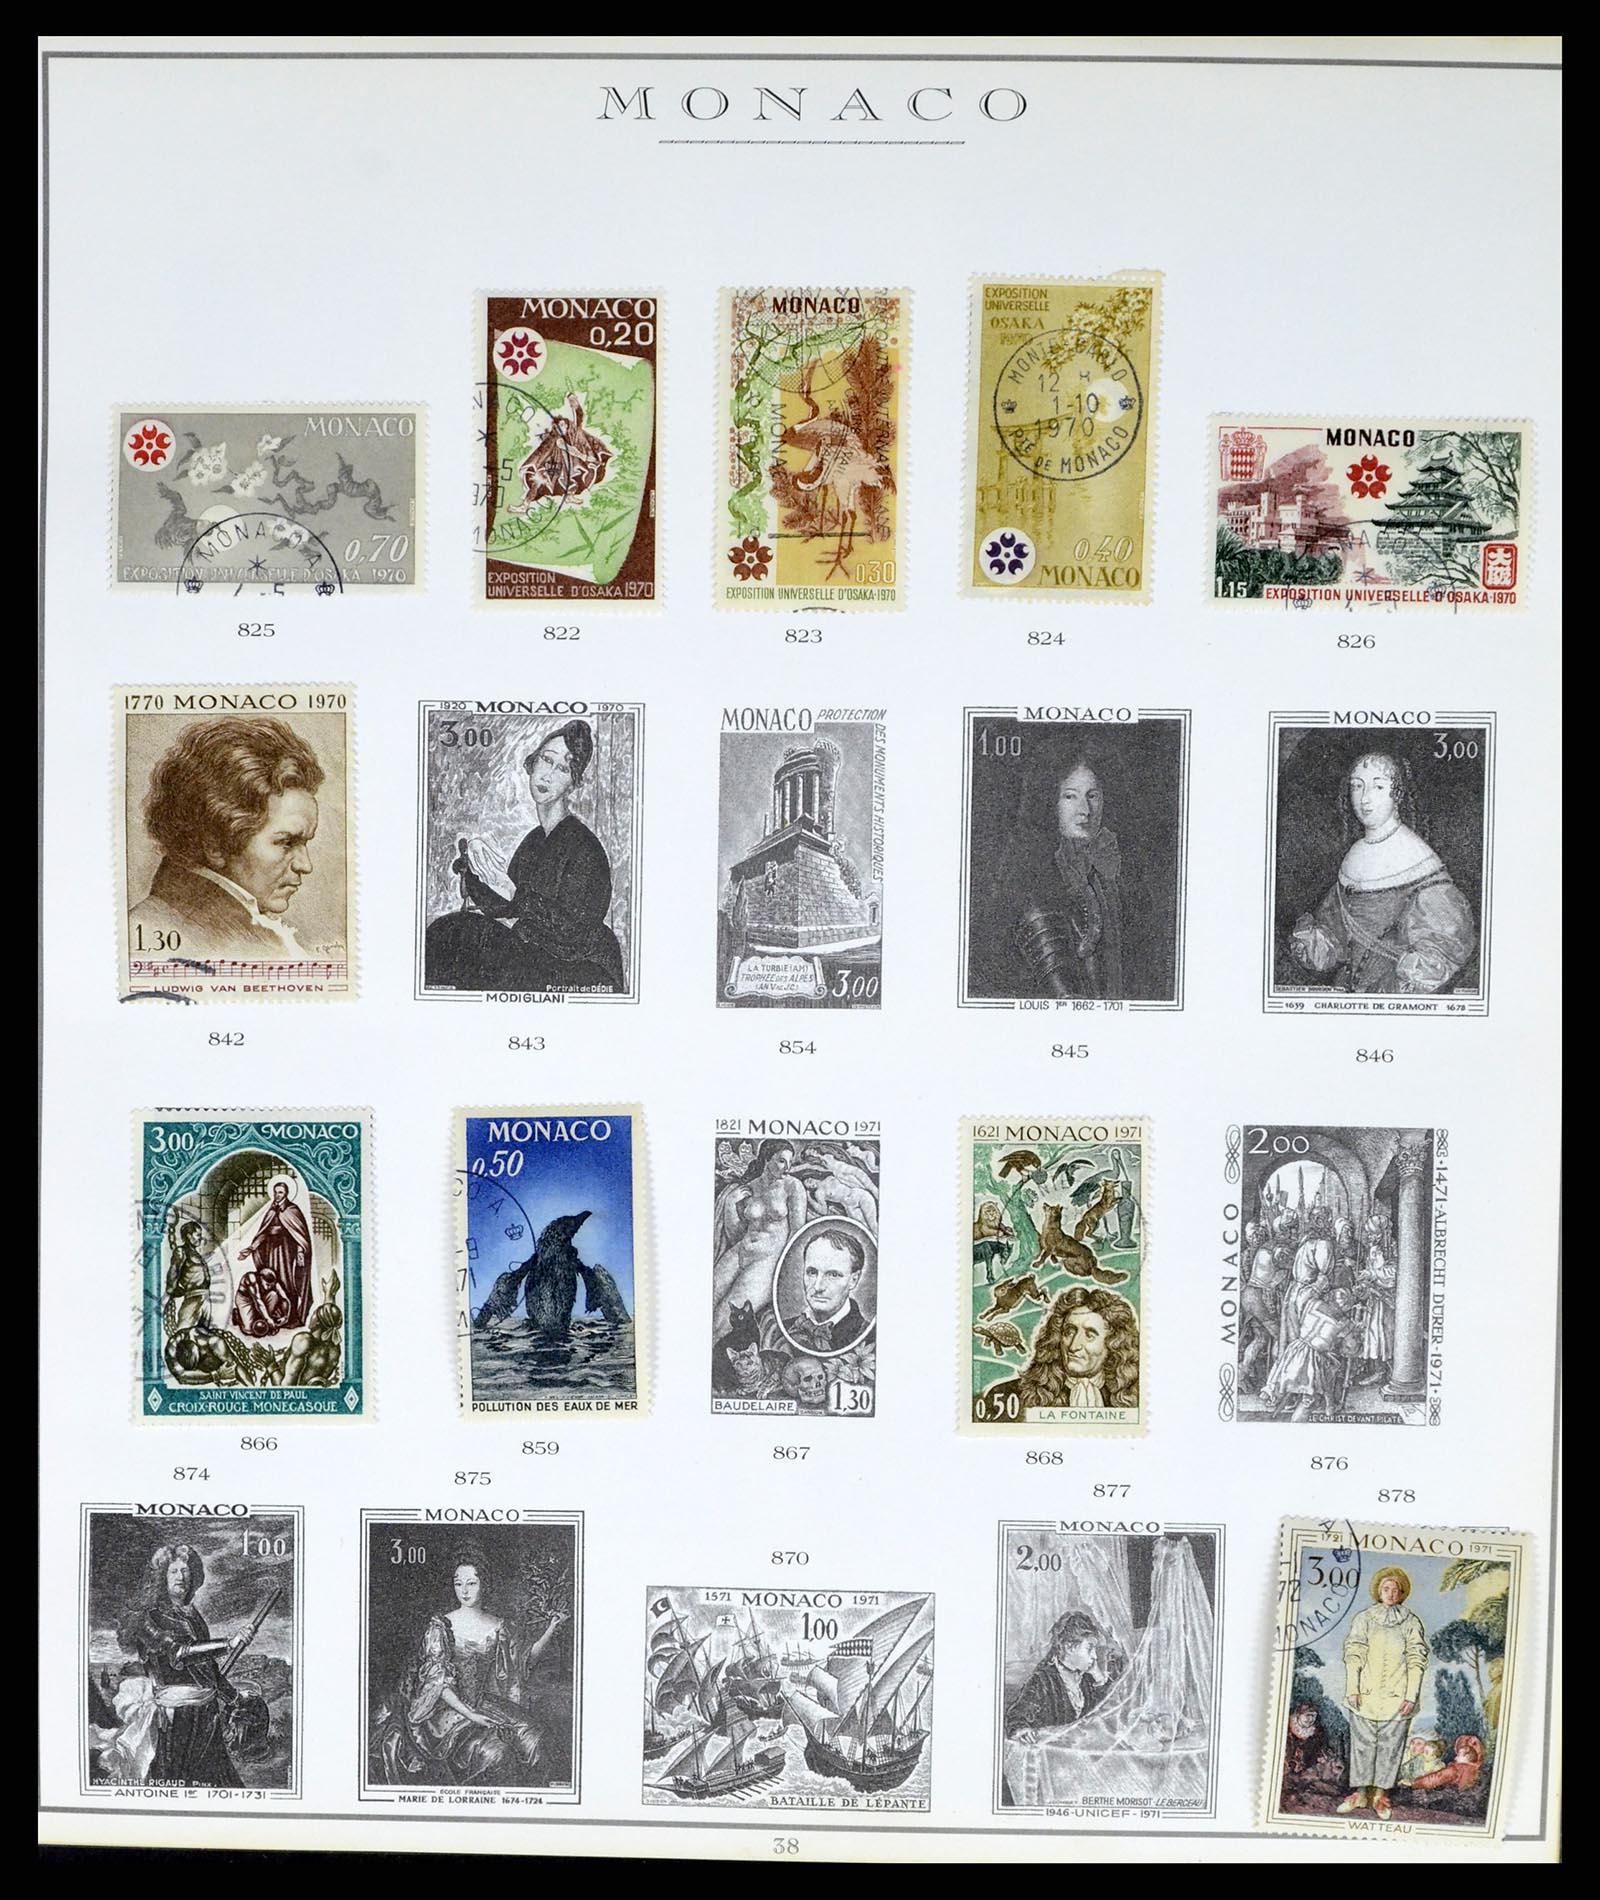 37437 074 - Stamp collection 37437 Monaco 1885-1996.